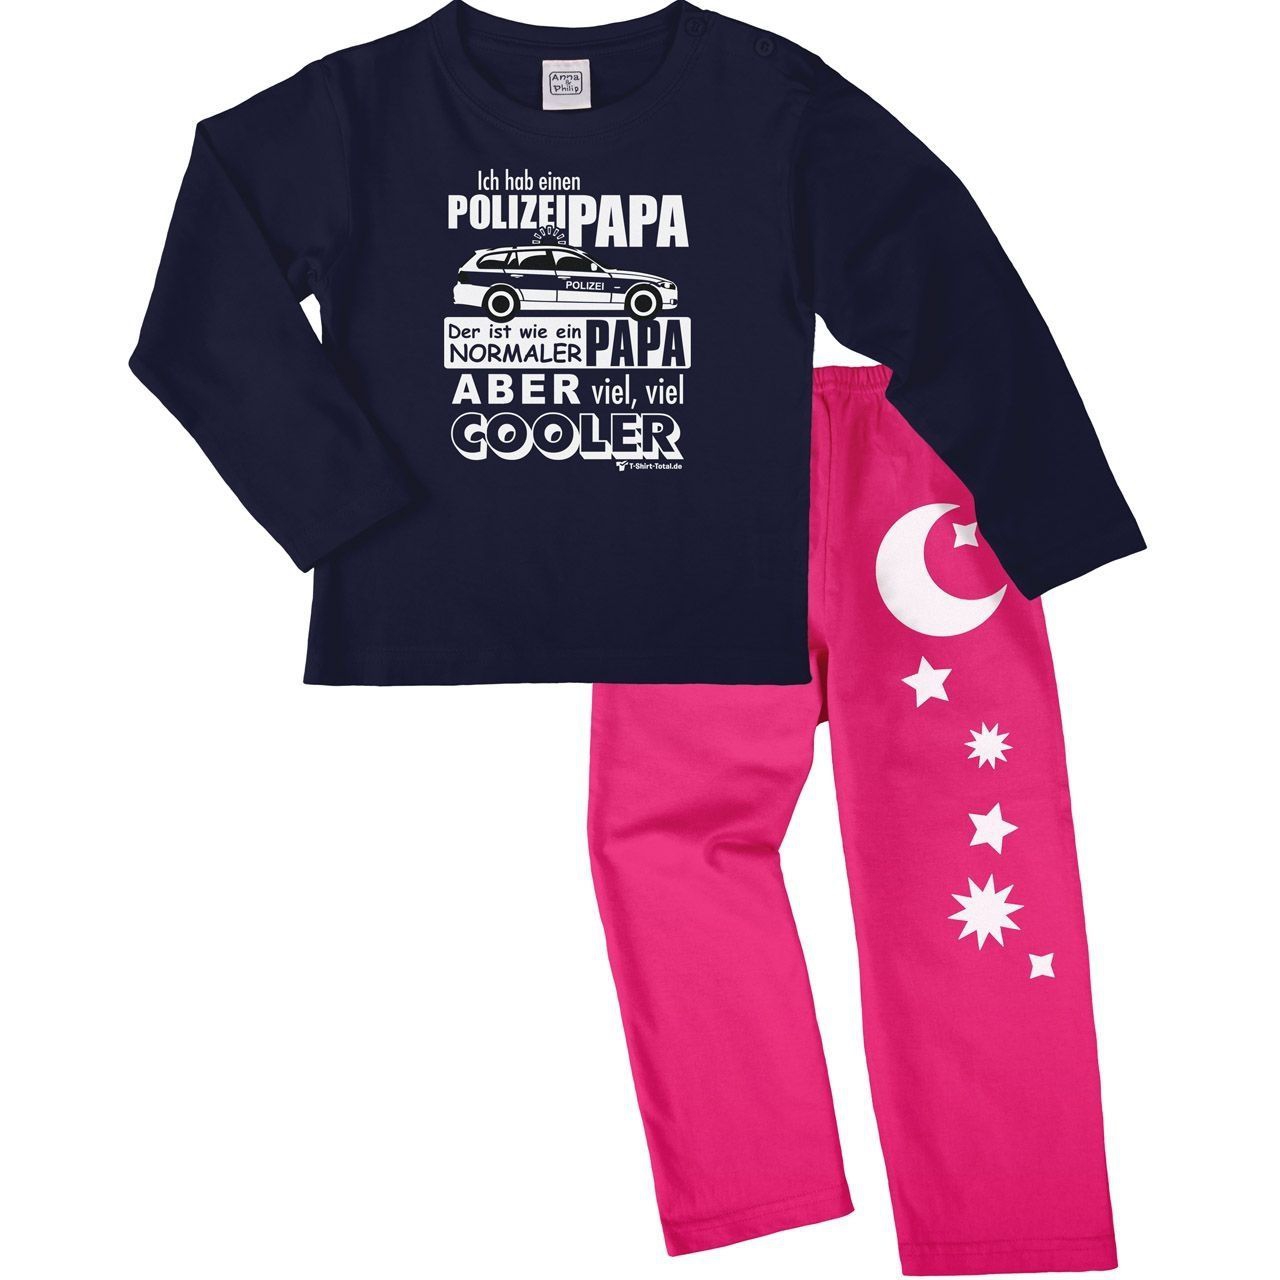 Polizei Papa Pyjama Set navy / pink 110 / 116